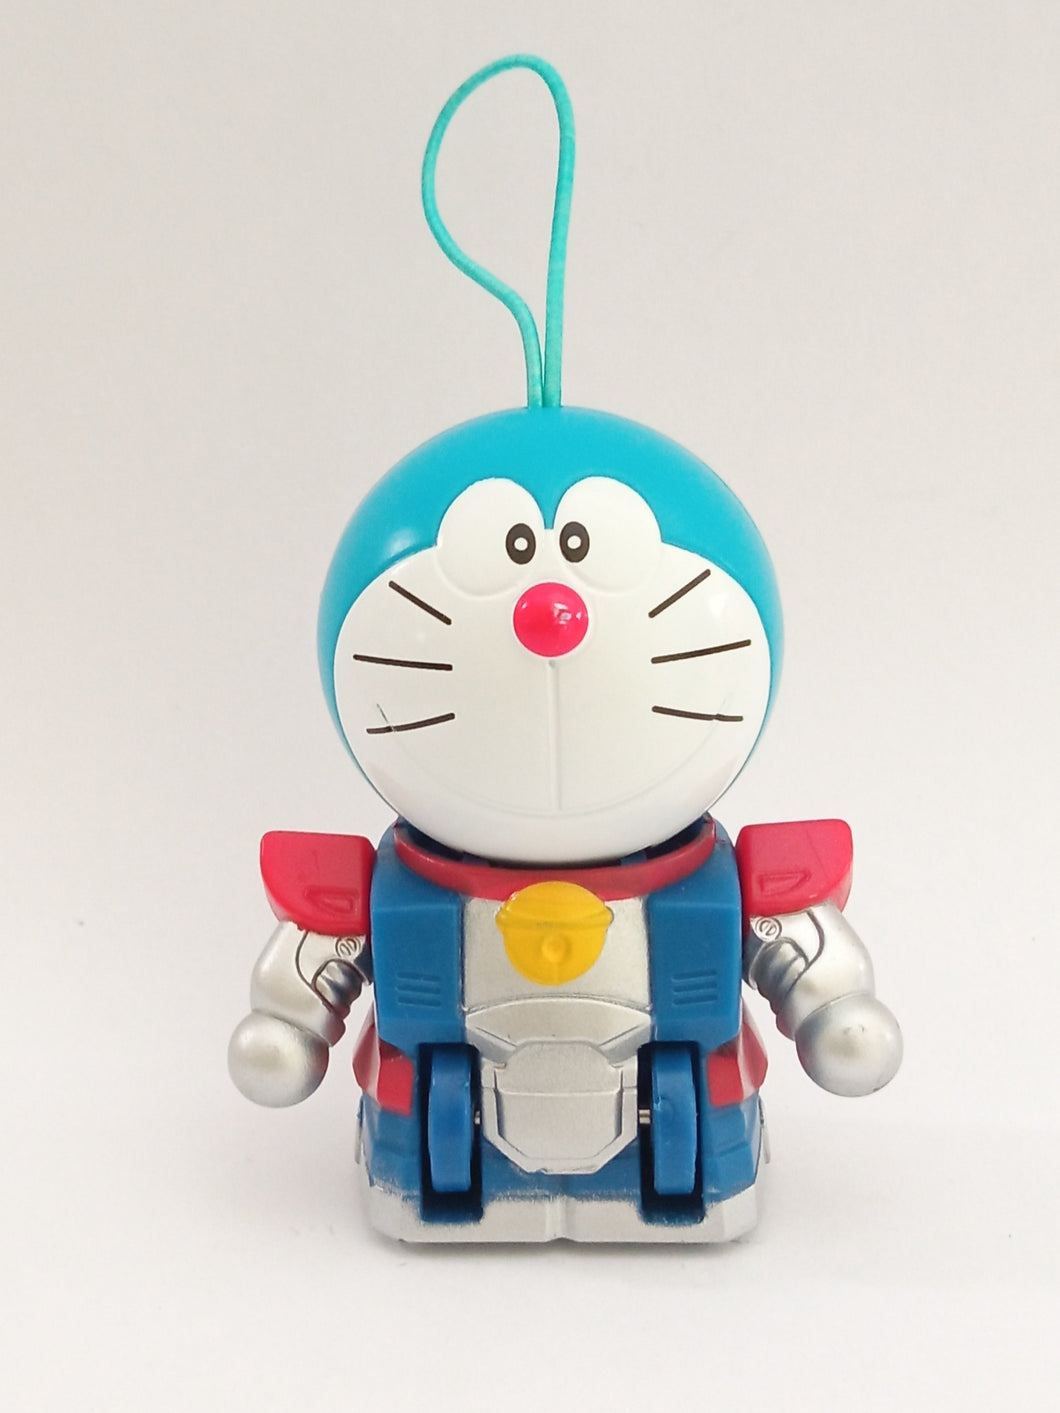 Doraemon Mecha Robot Pull Back Figure Keychain Mascot Key Holder Strap Movie Promo